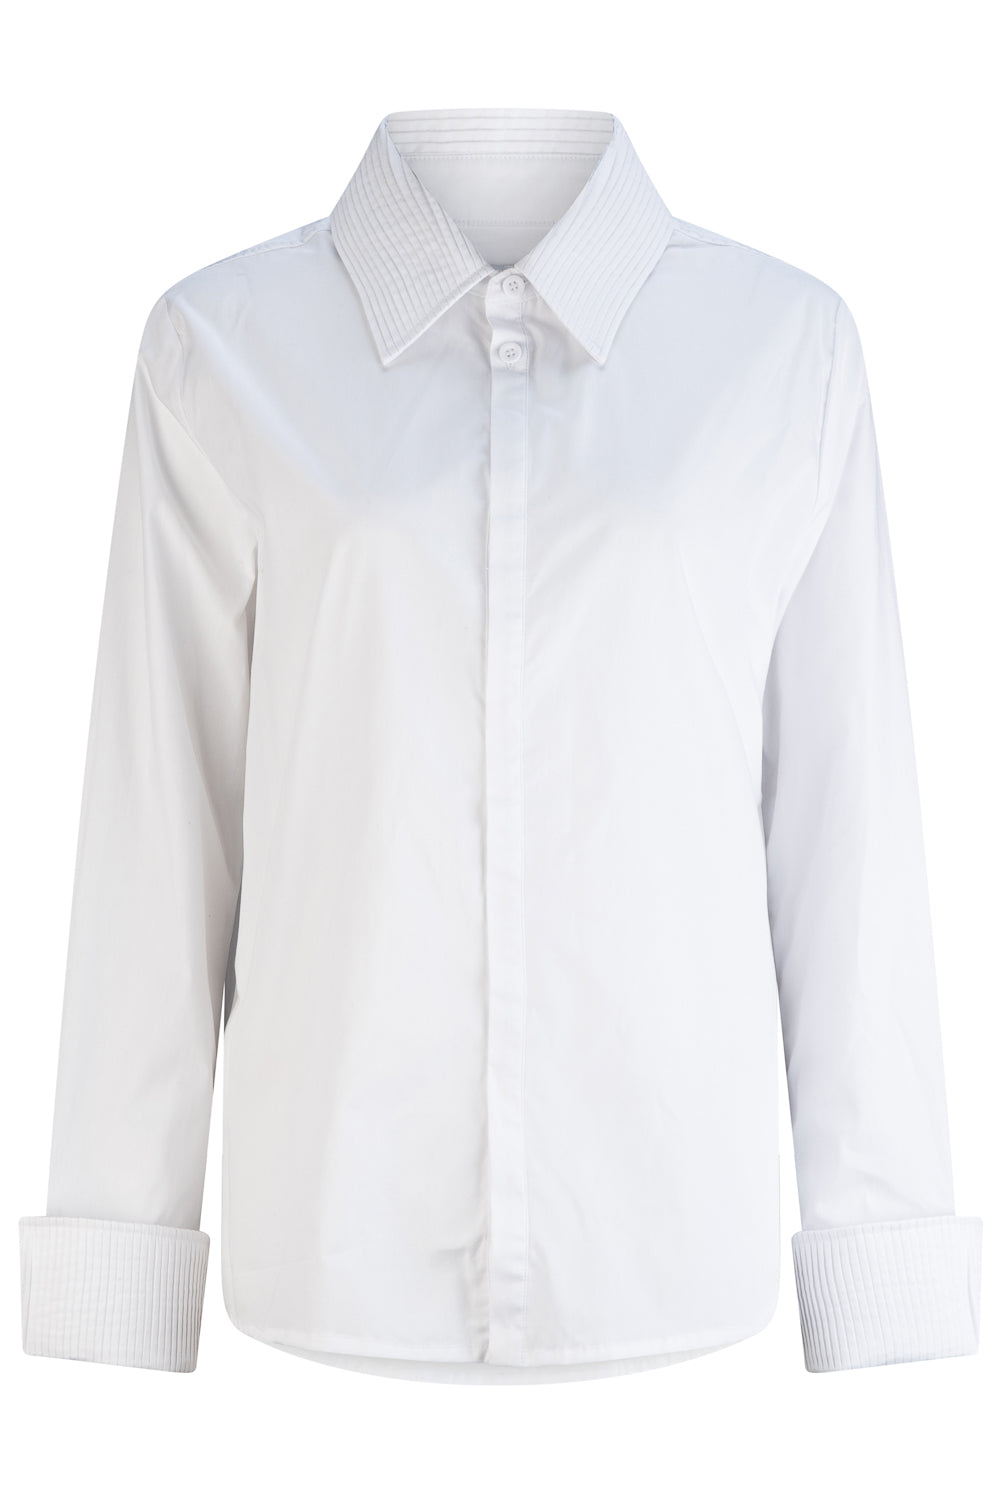 Ontario Shirt - White – www.drefbyd.com.au